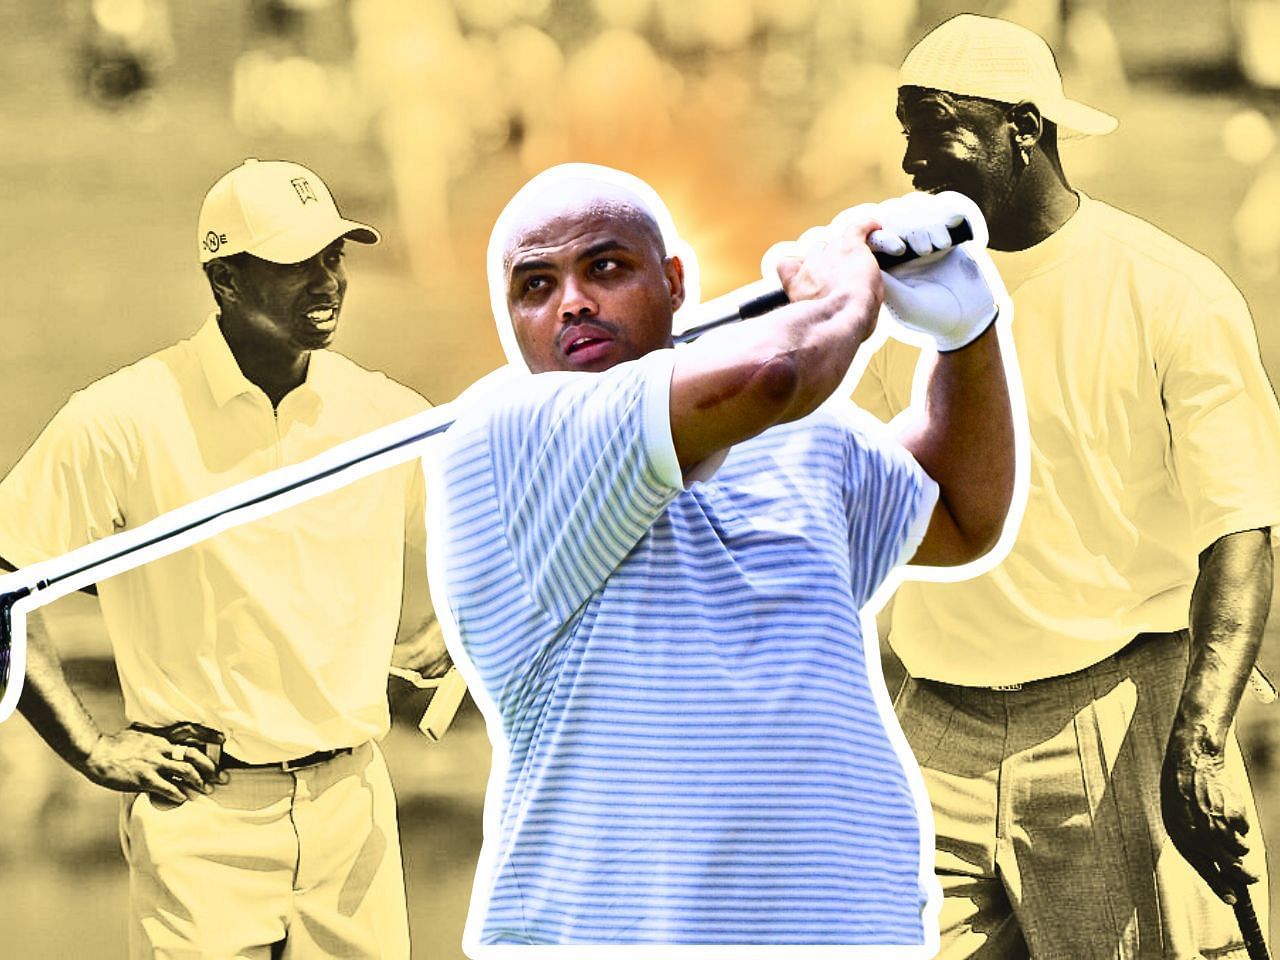 Charles Barkley, Michael Jordan, and Tiger Woods